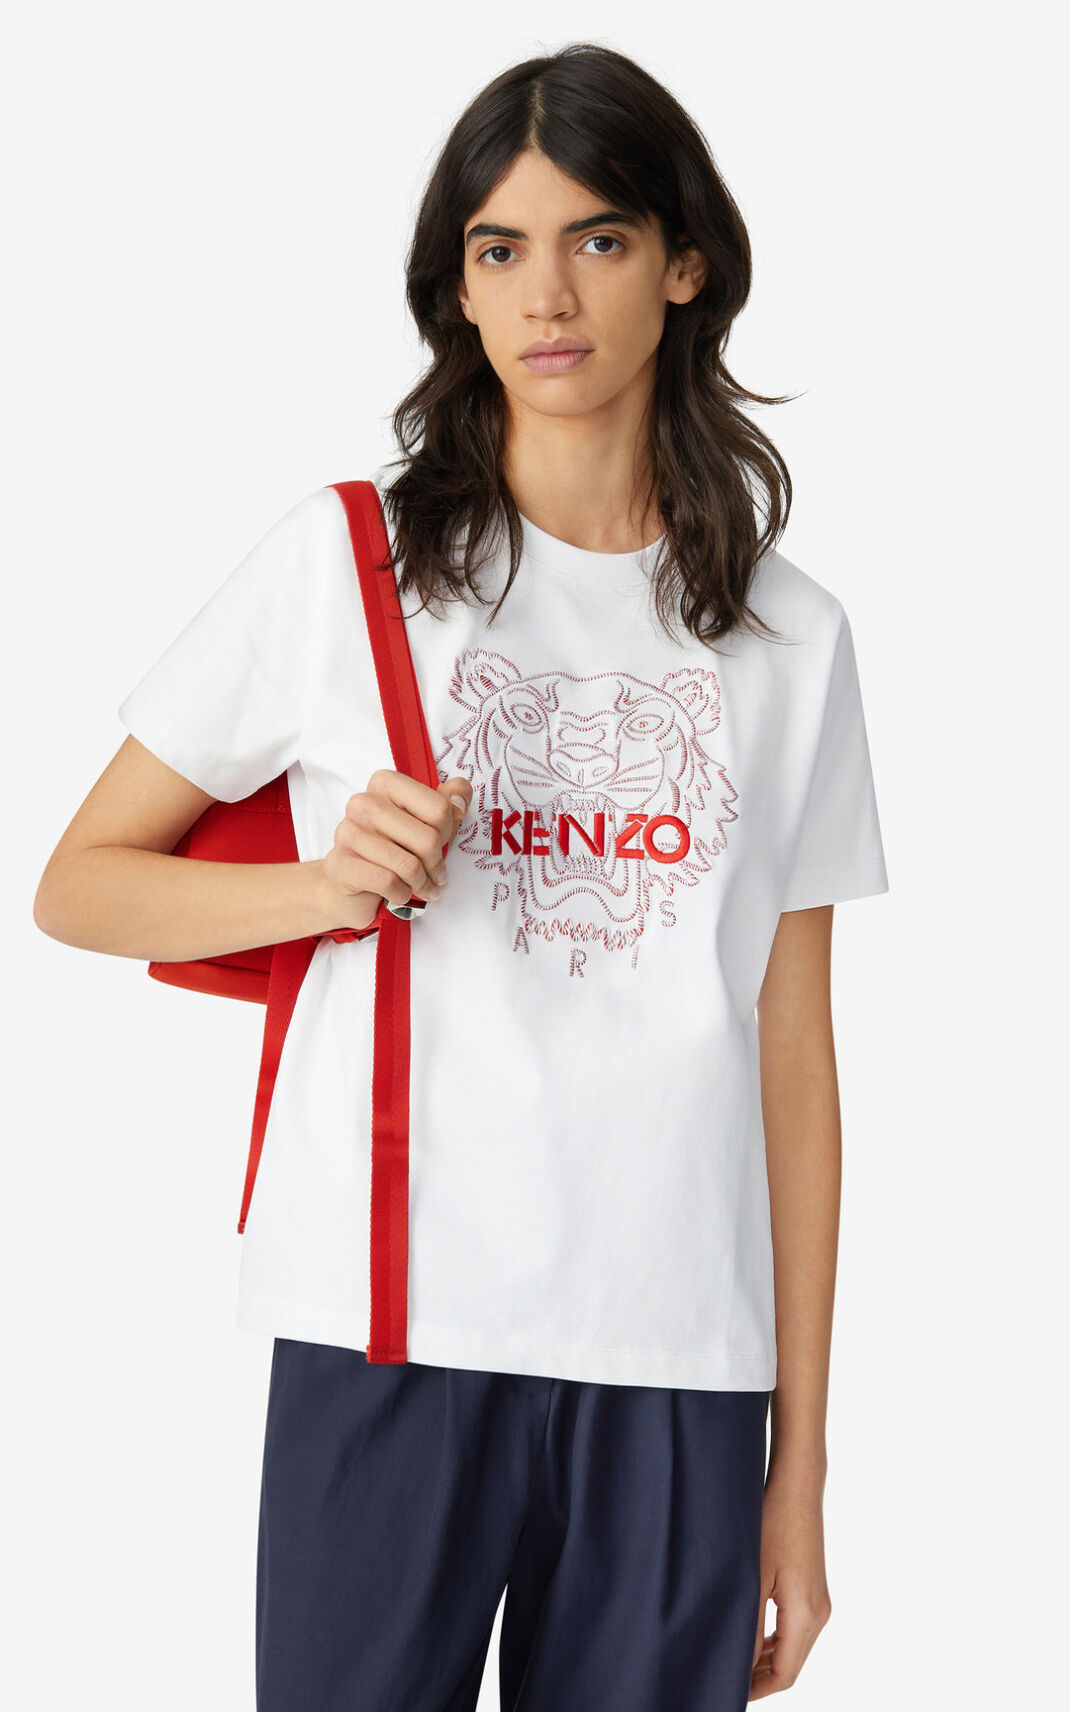 Camisetas Kenzo Tiger loose fitting Mujer Blancas - SKU.1776364